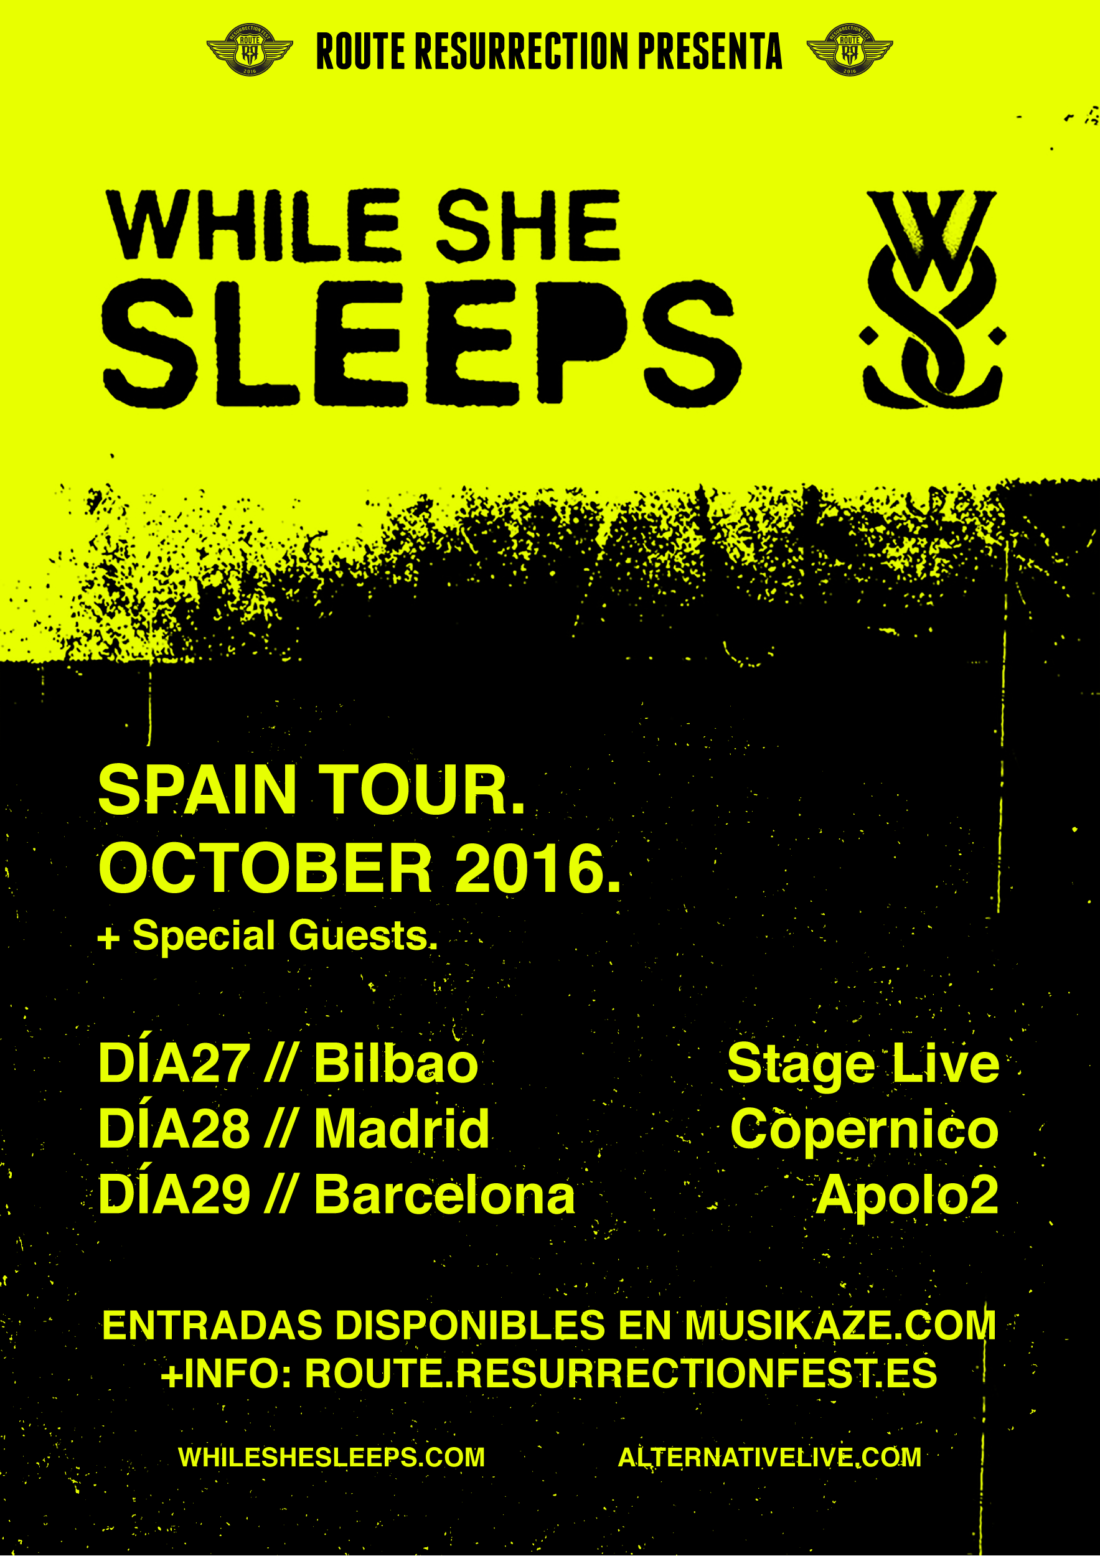 Nuevo Route Resurrection Fest: While She Sleeps en Bilbao, Madrid y Barcelona